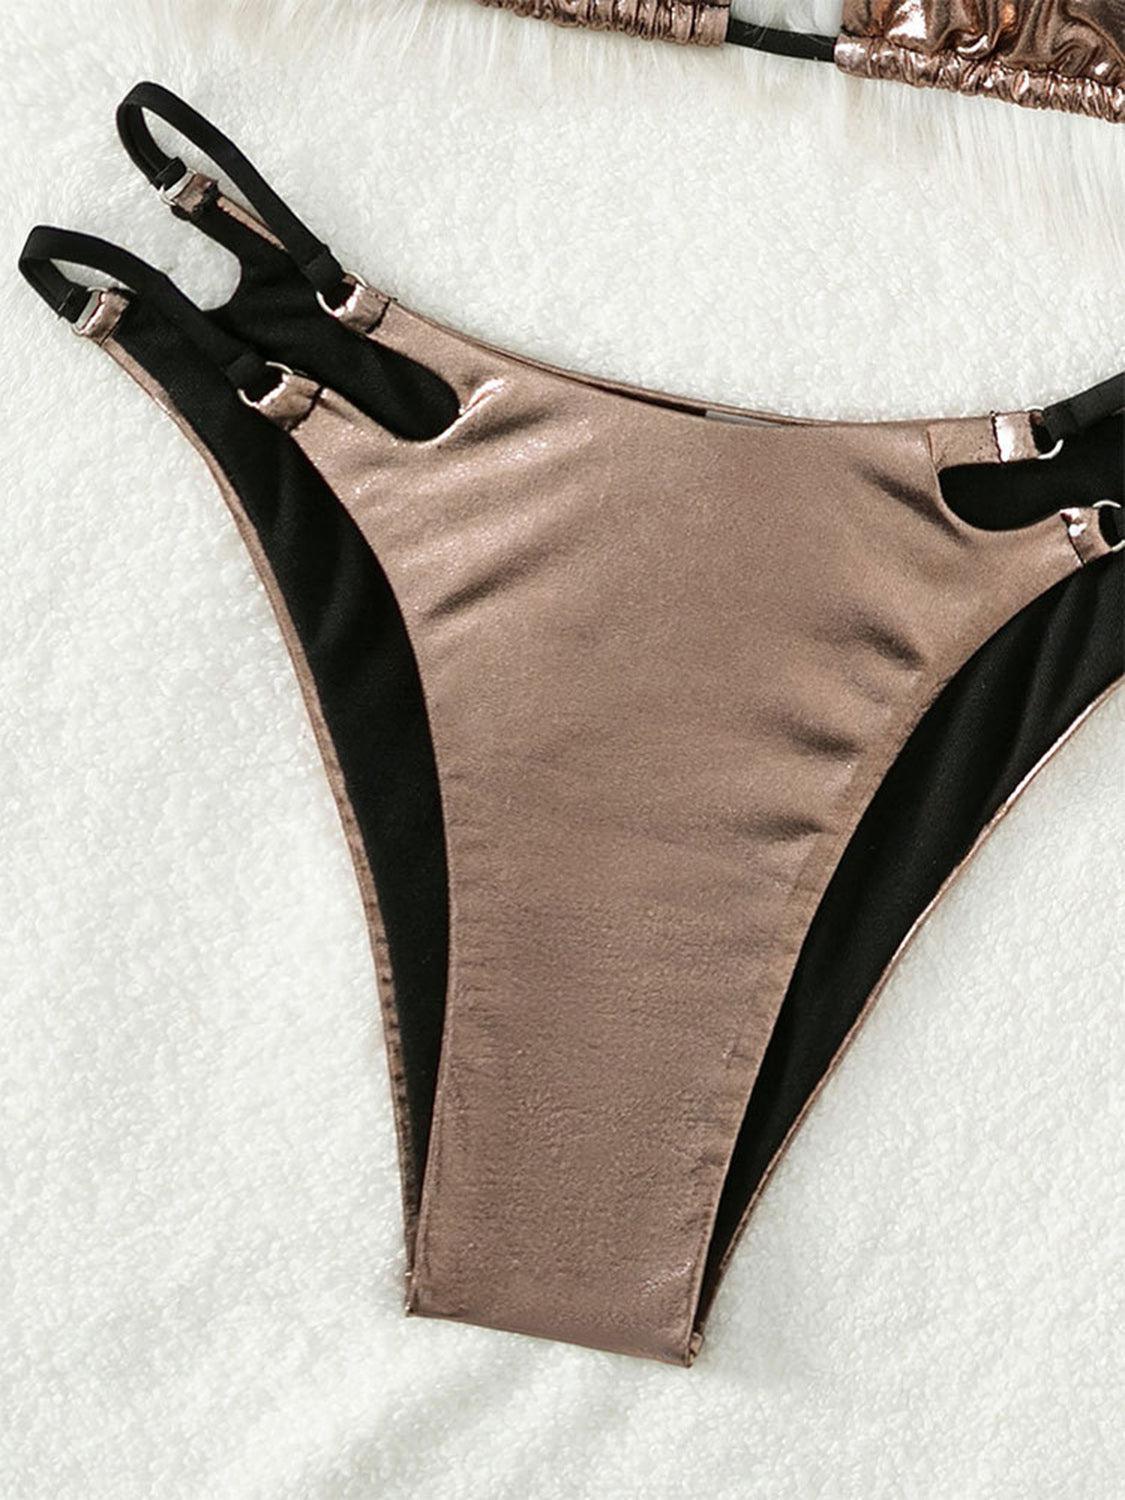 a bikini top with black straps and a pink bikini bottom